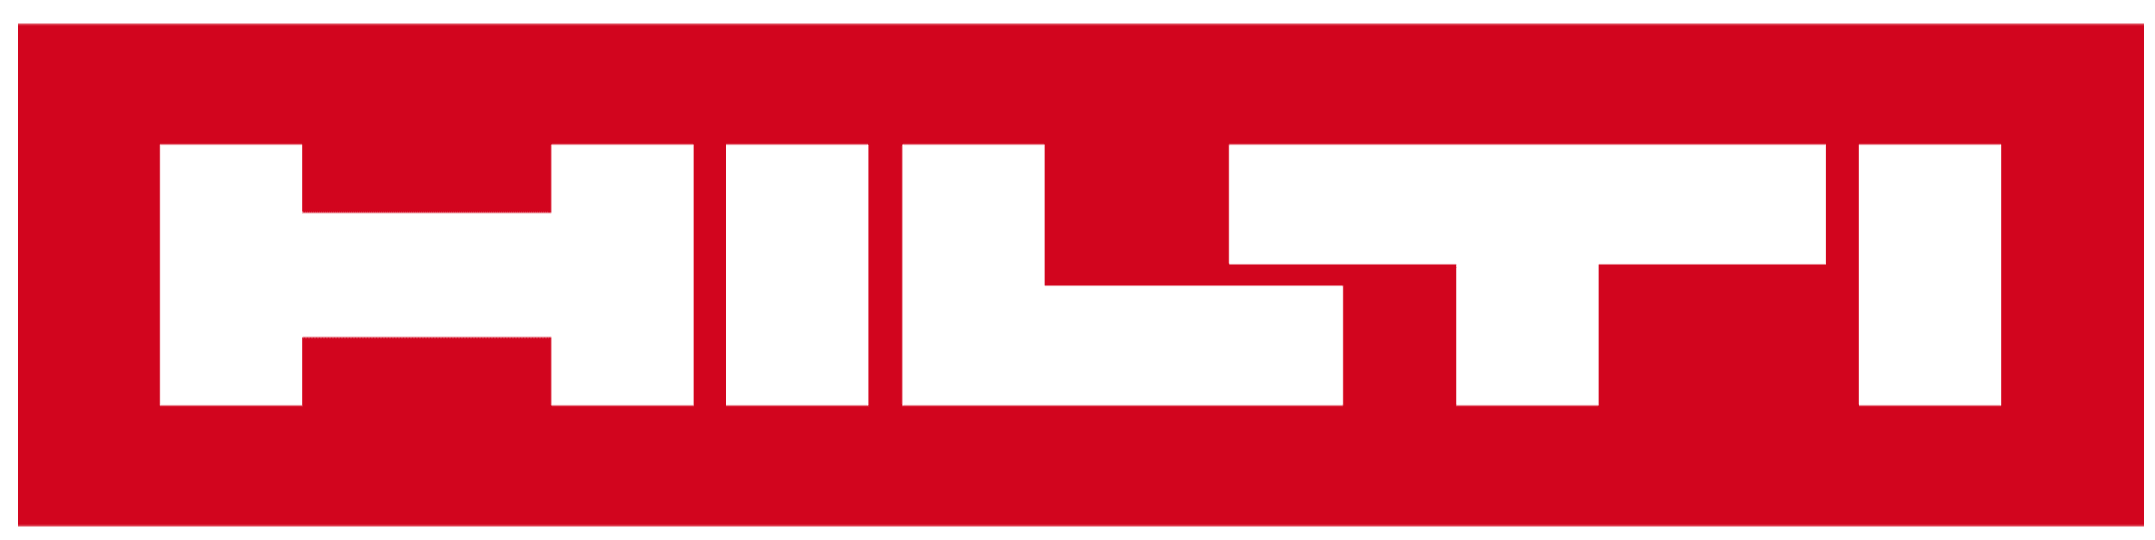 Hilti logo-1